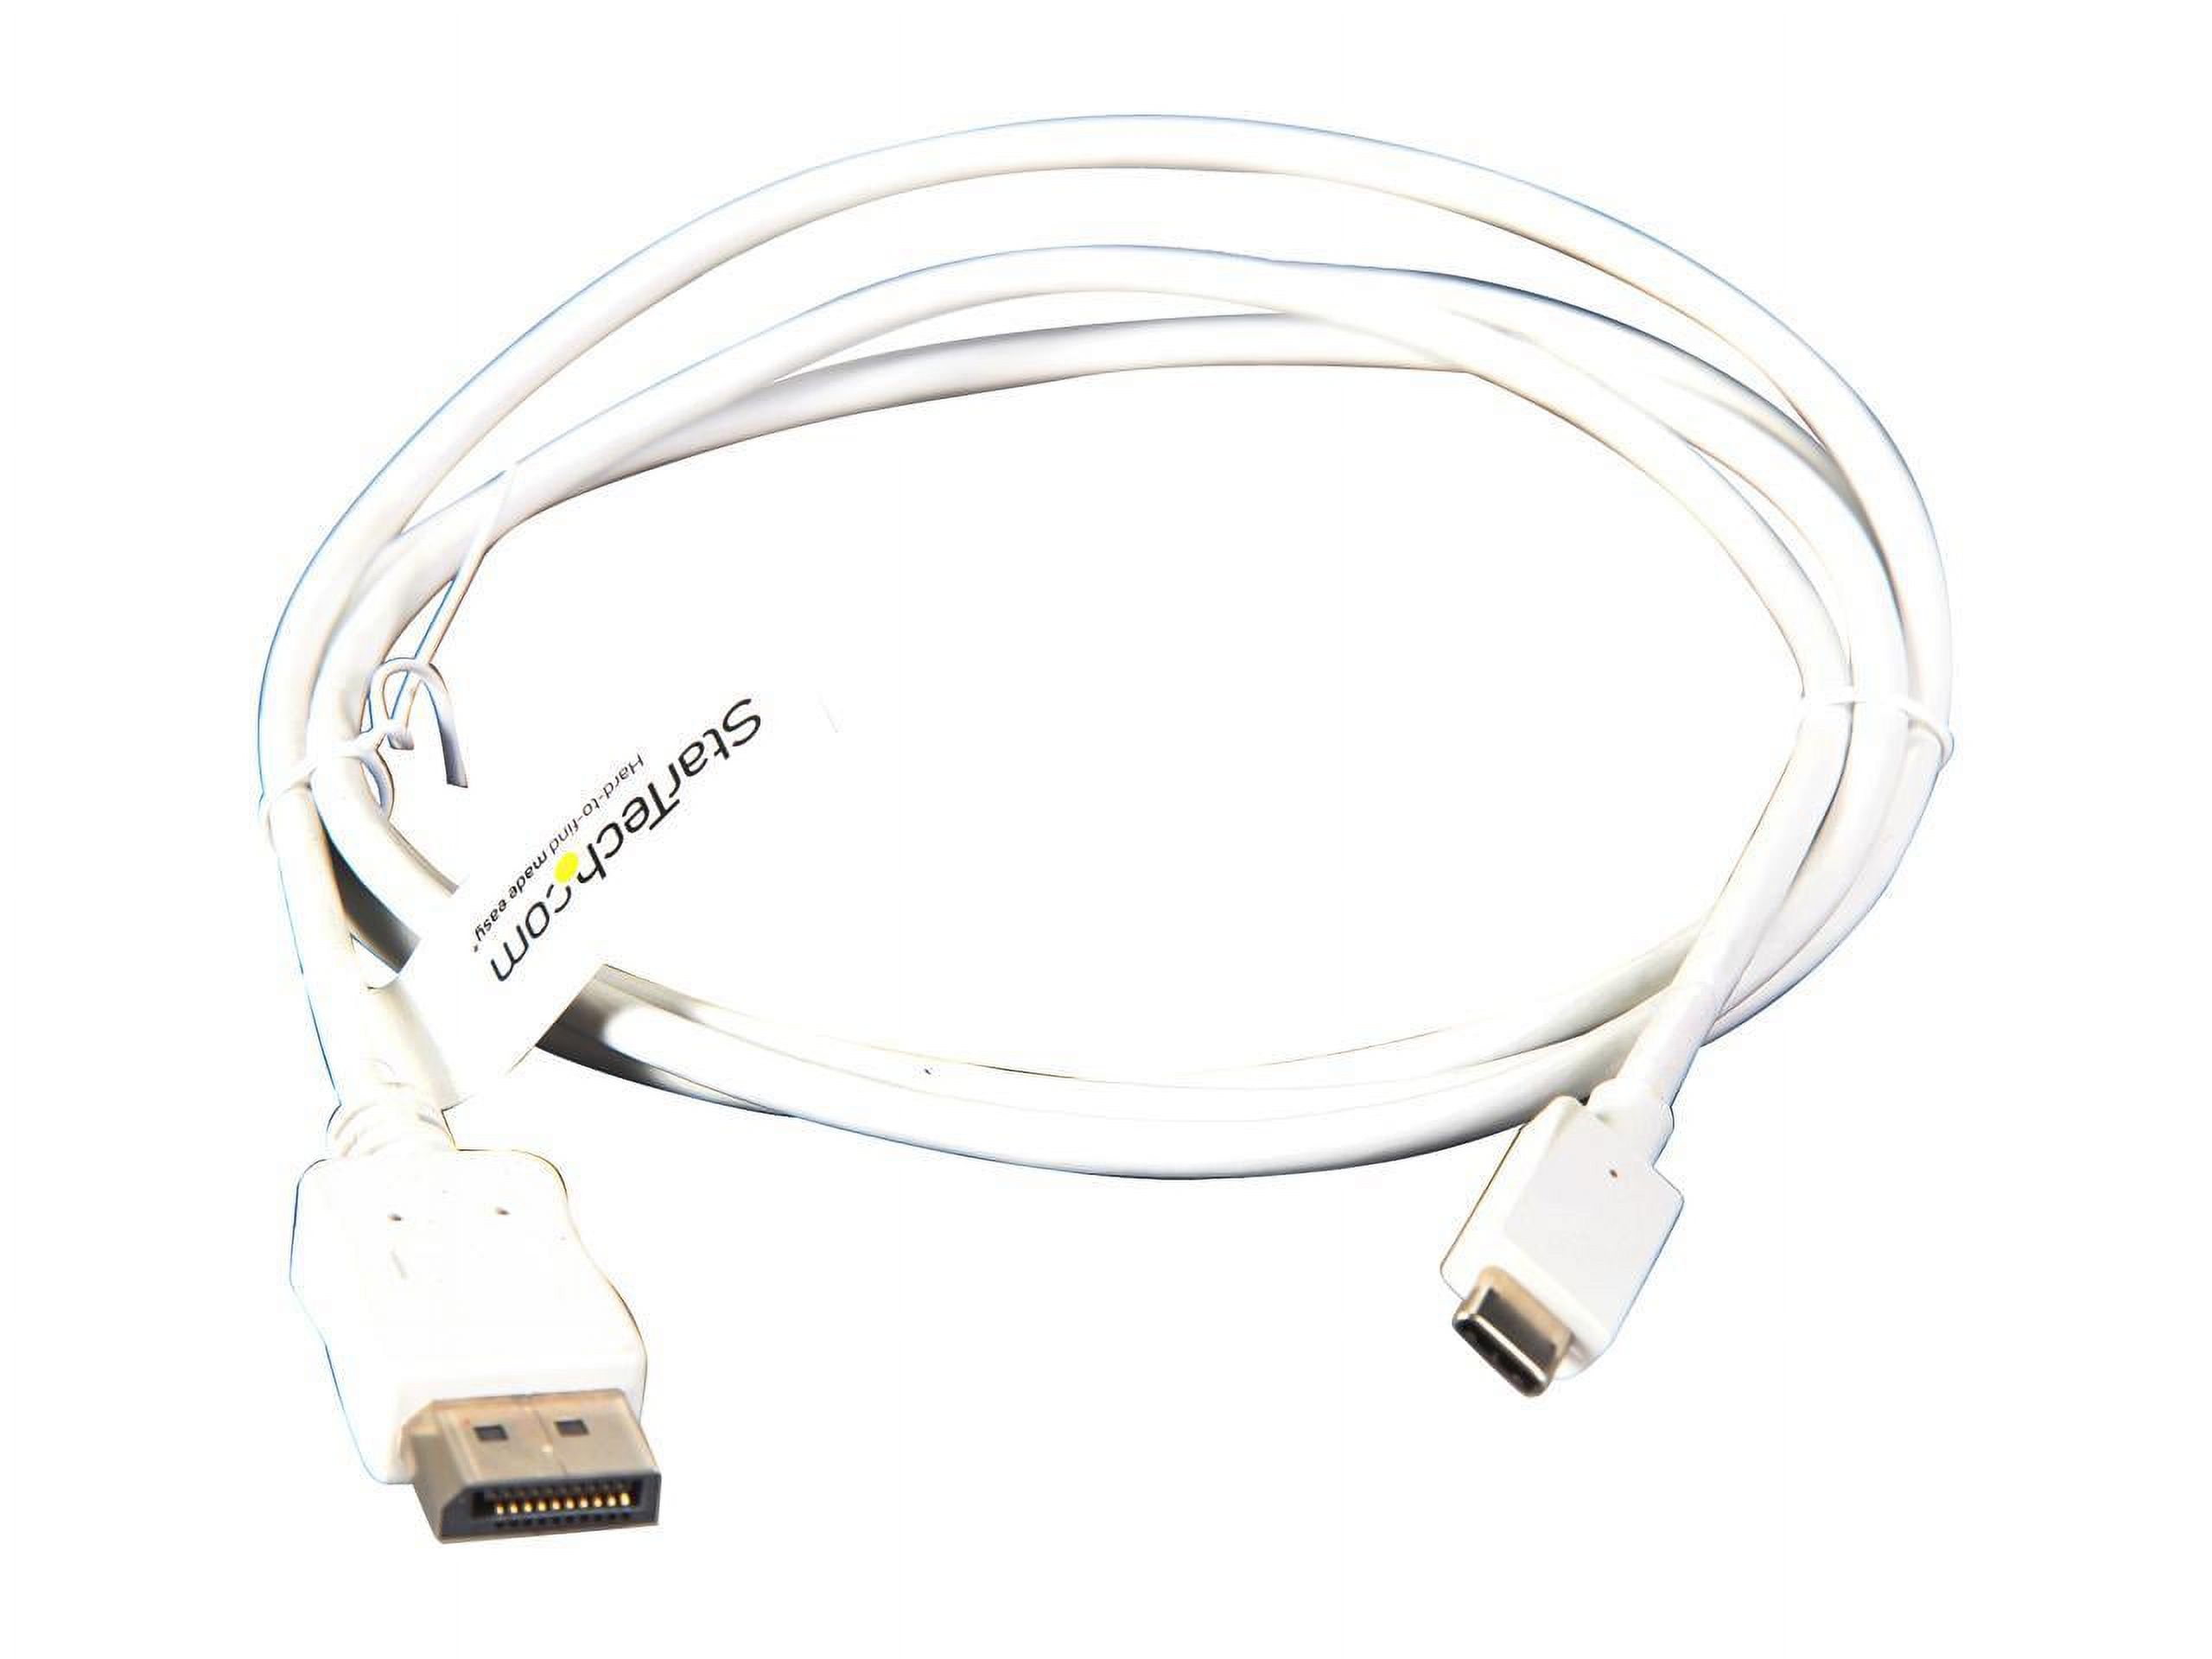 StarTech.com CDP2DPMM6W 6ft USB C to DisplayPort Cable - White - 4K 60Hz DisplayPort Cable - USB Type C to DisplayPort Adapter (CDP2DPMM6W) - image 2 of 3